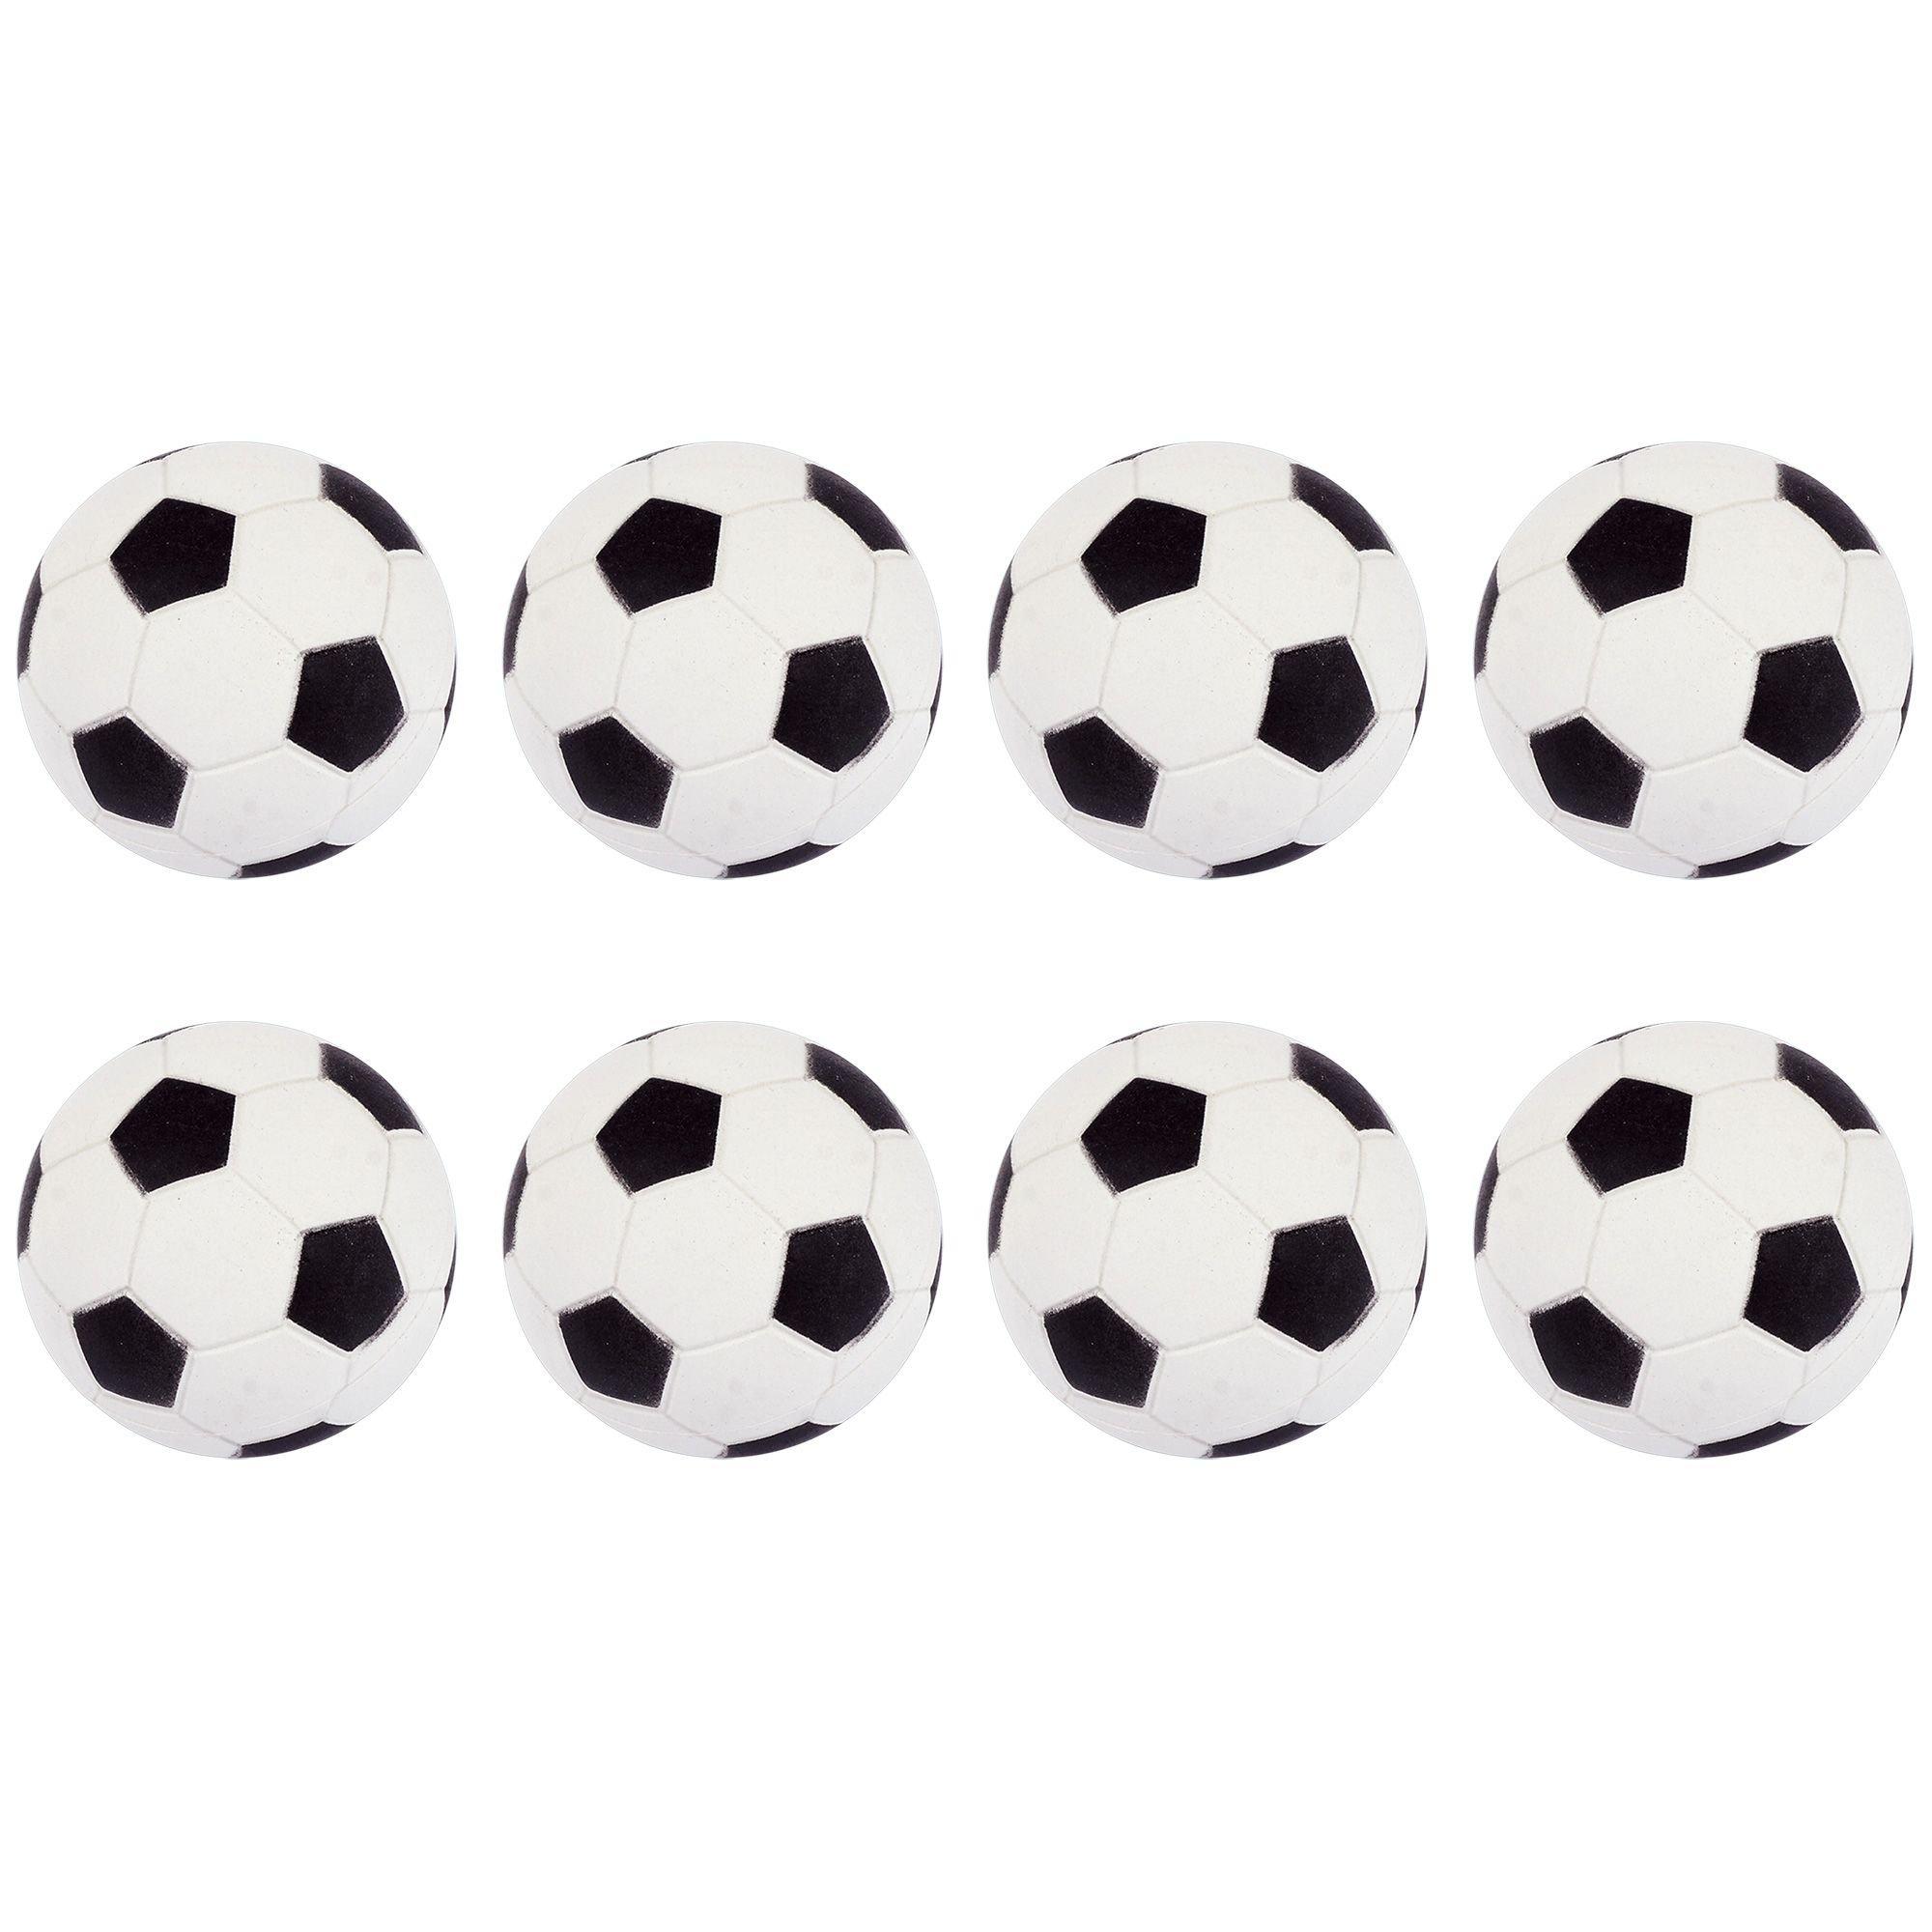 Soccer Balls.